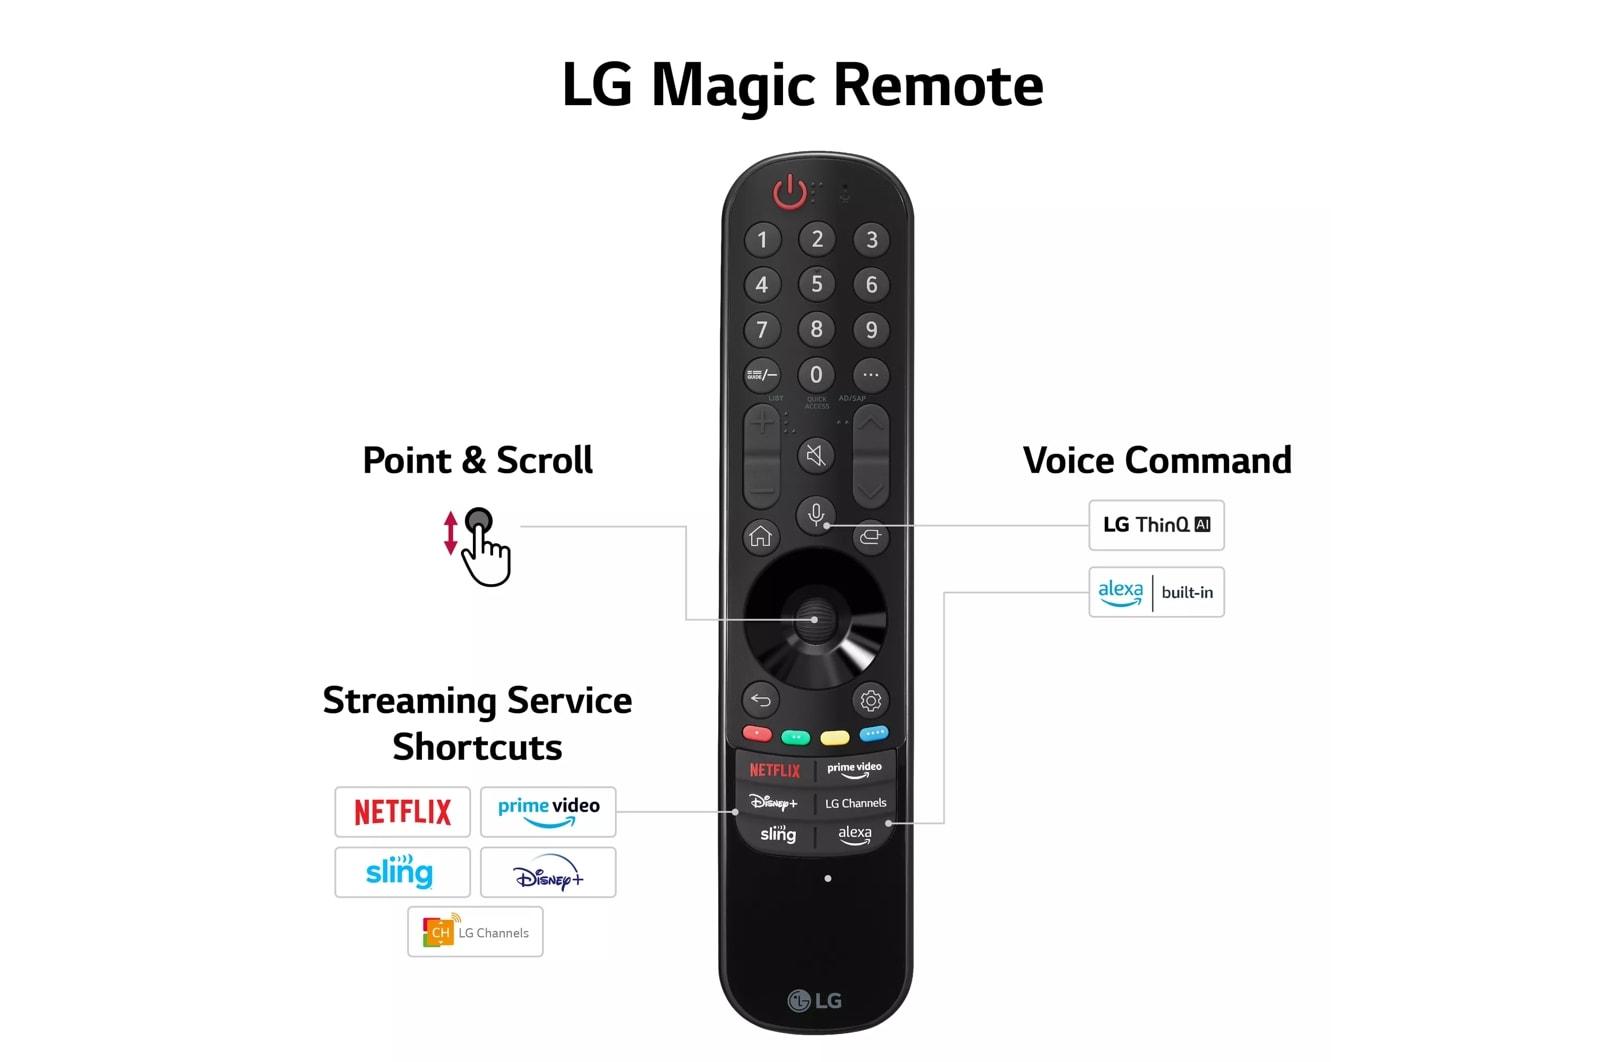 LG 75 Inch Class QNED75 series LED 4K UHD Smart webOS 23 w/ ThinQ AI TV